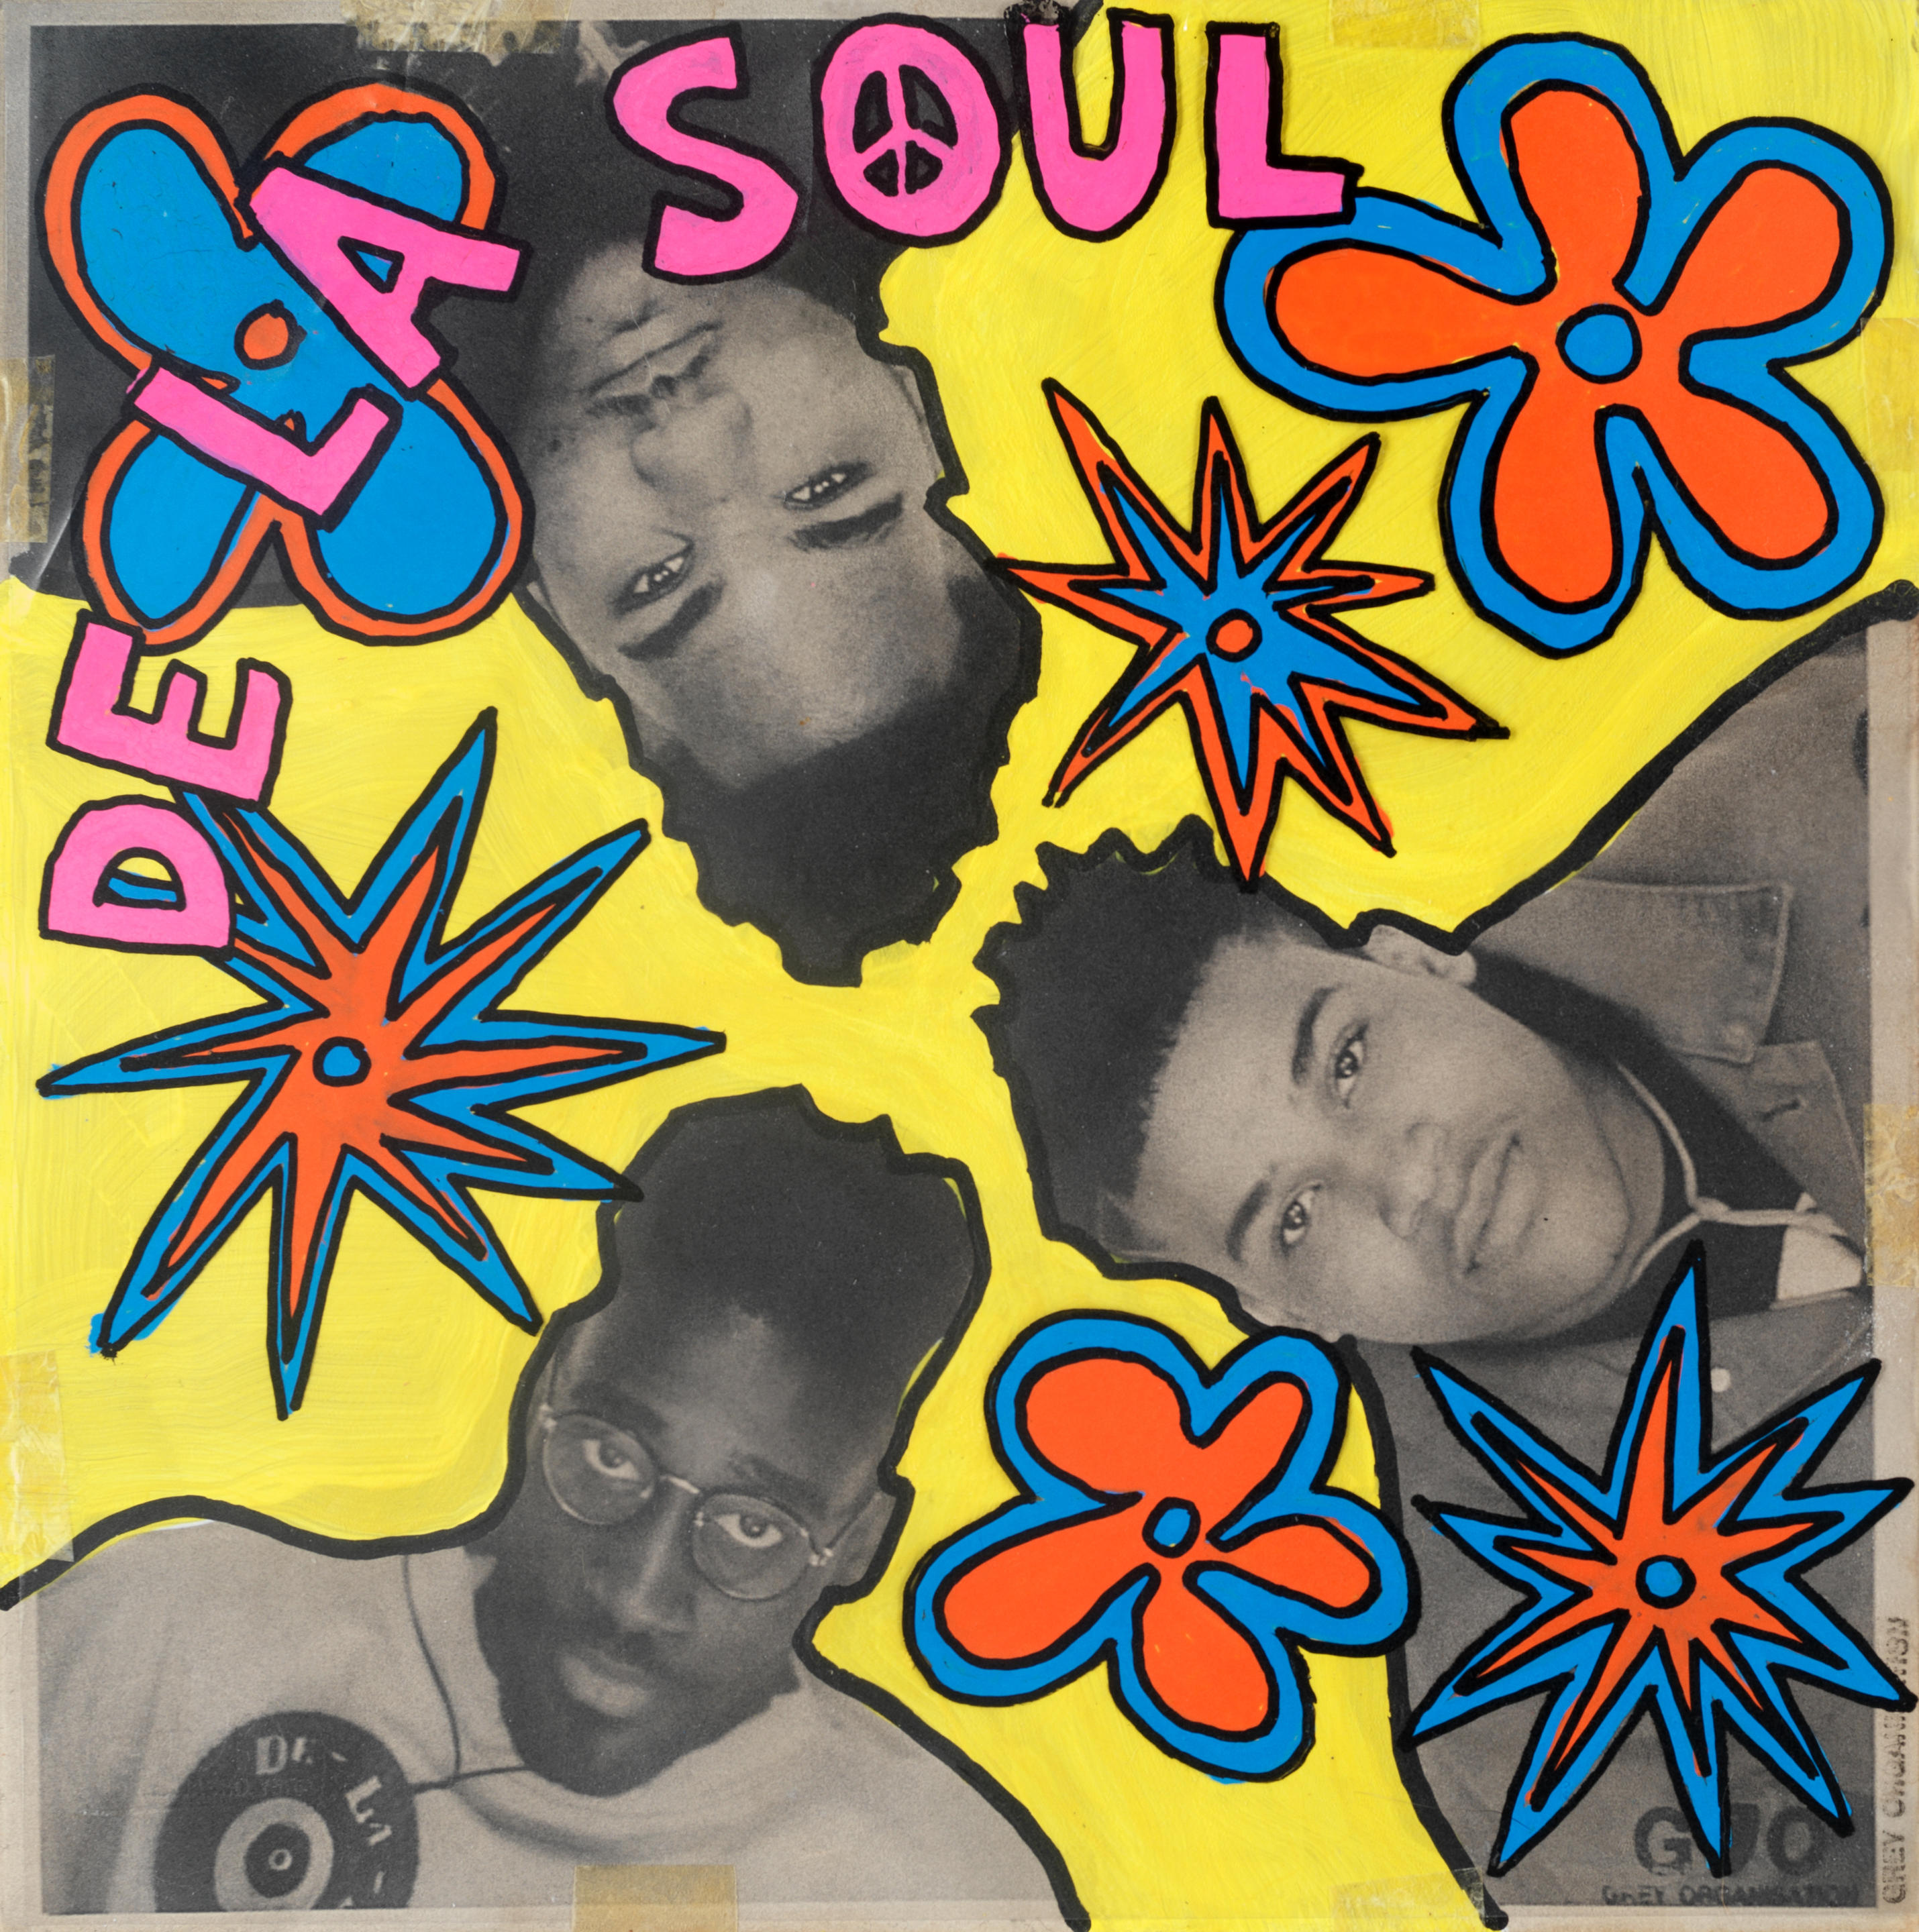 De La Soul - 3 feet high & rising  Album cover art, Album covers, Cover art